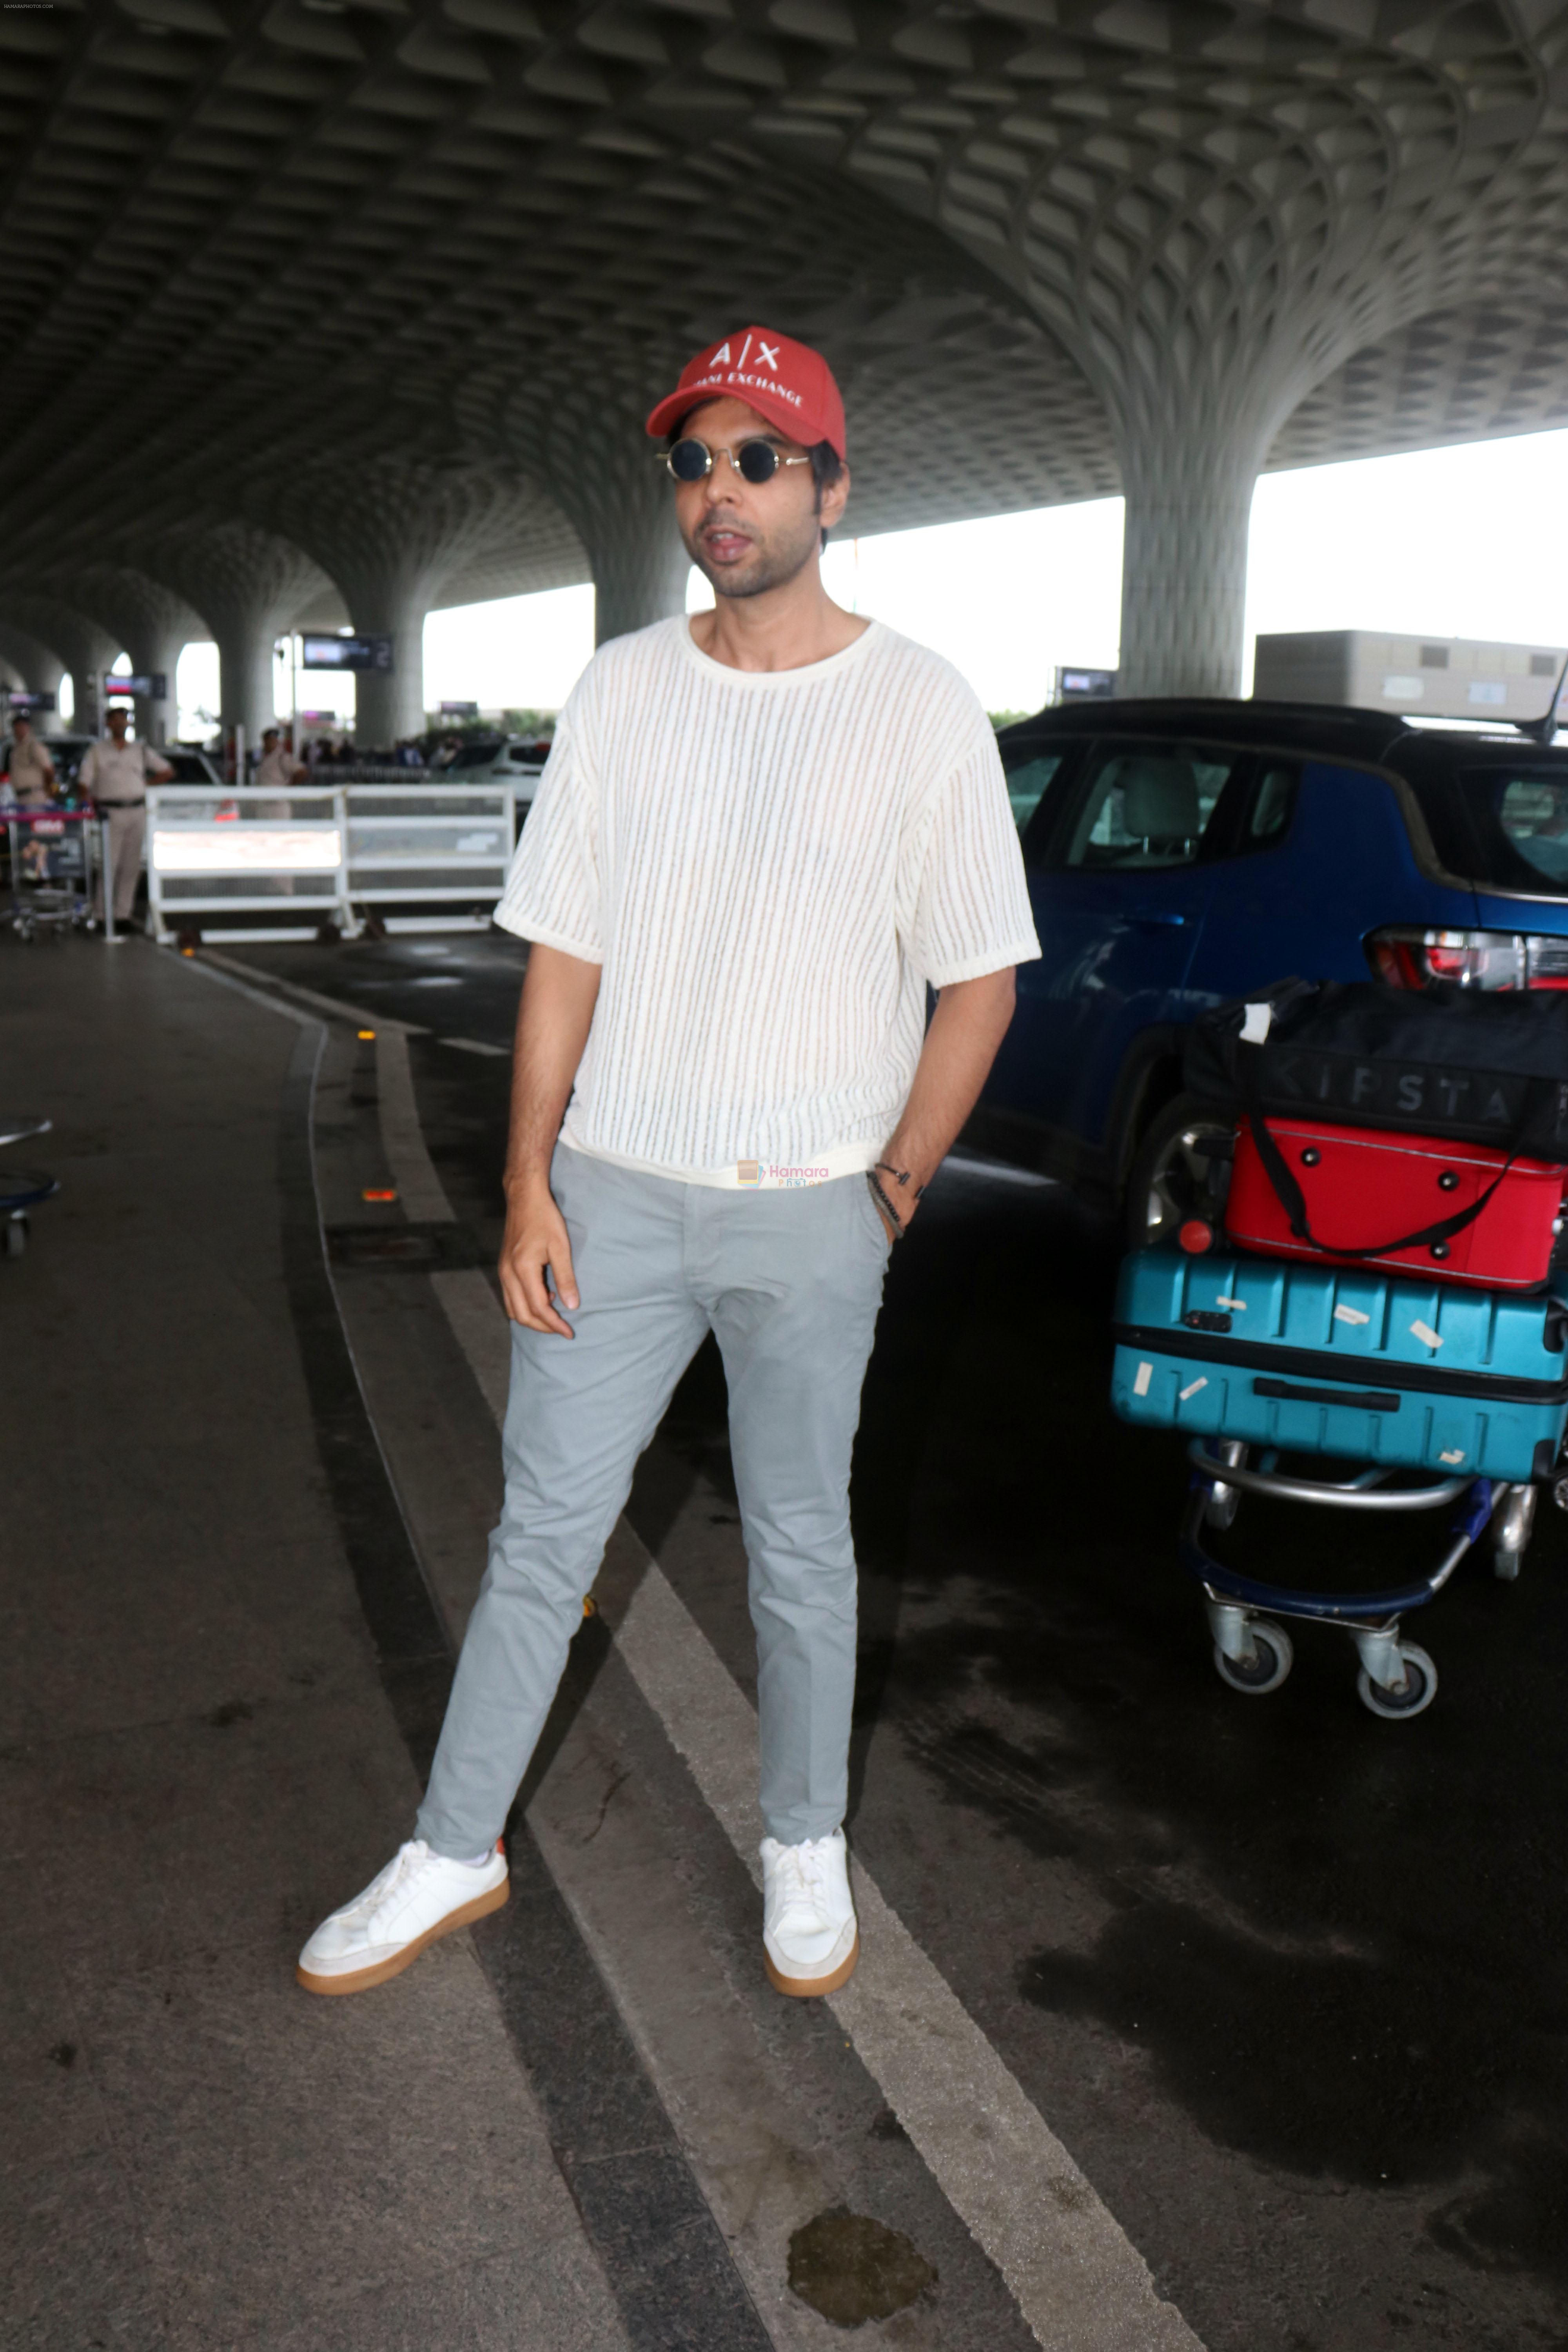 Abhishek Banerjee wearing Armani Exchange red cap seen at the airport on 1 July 2023